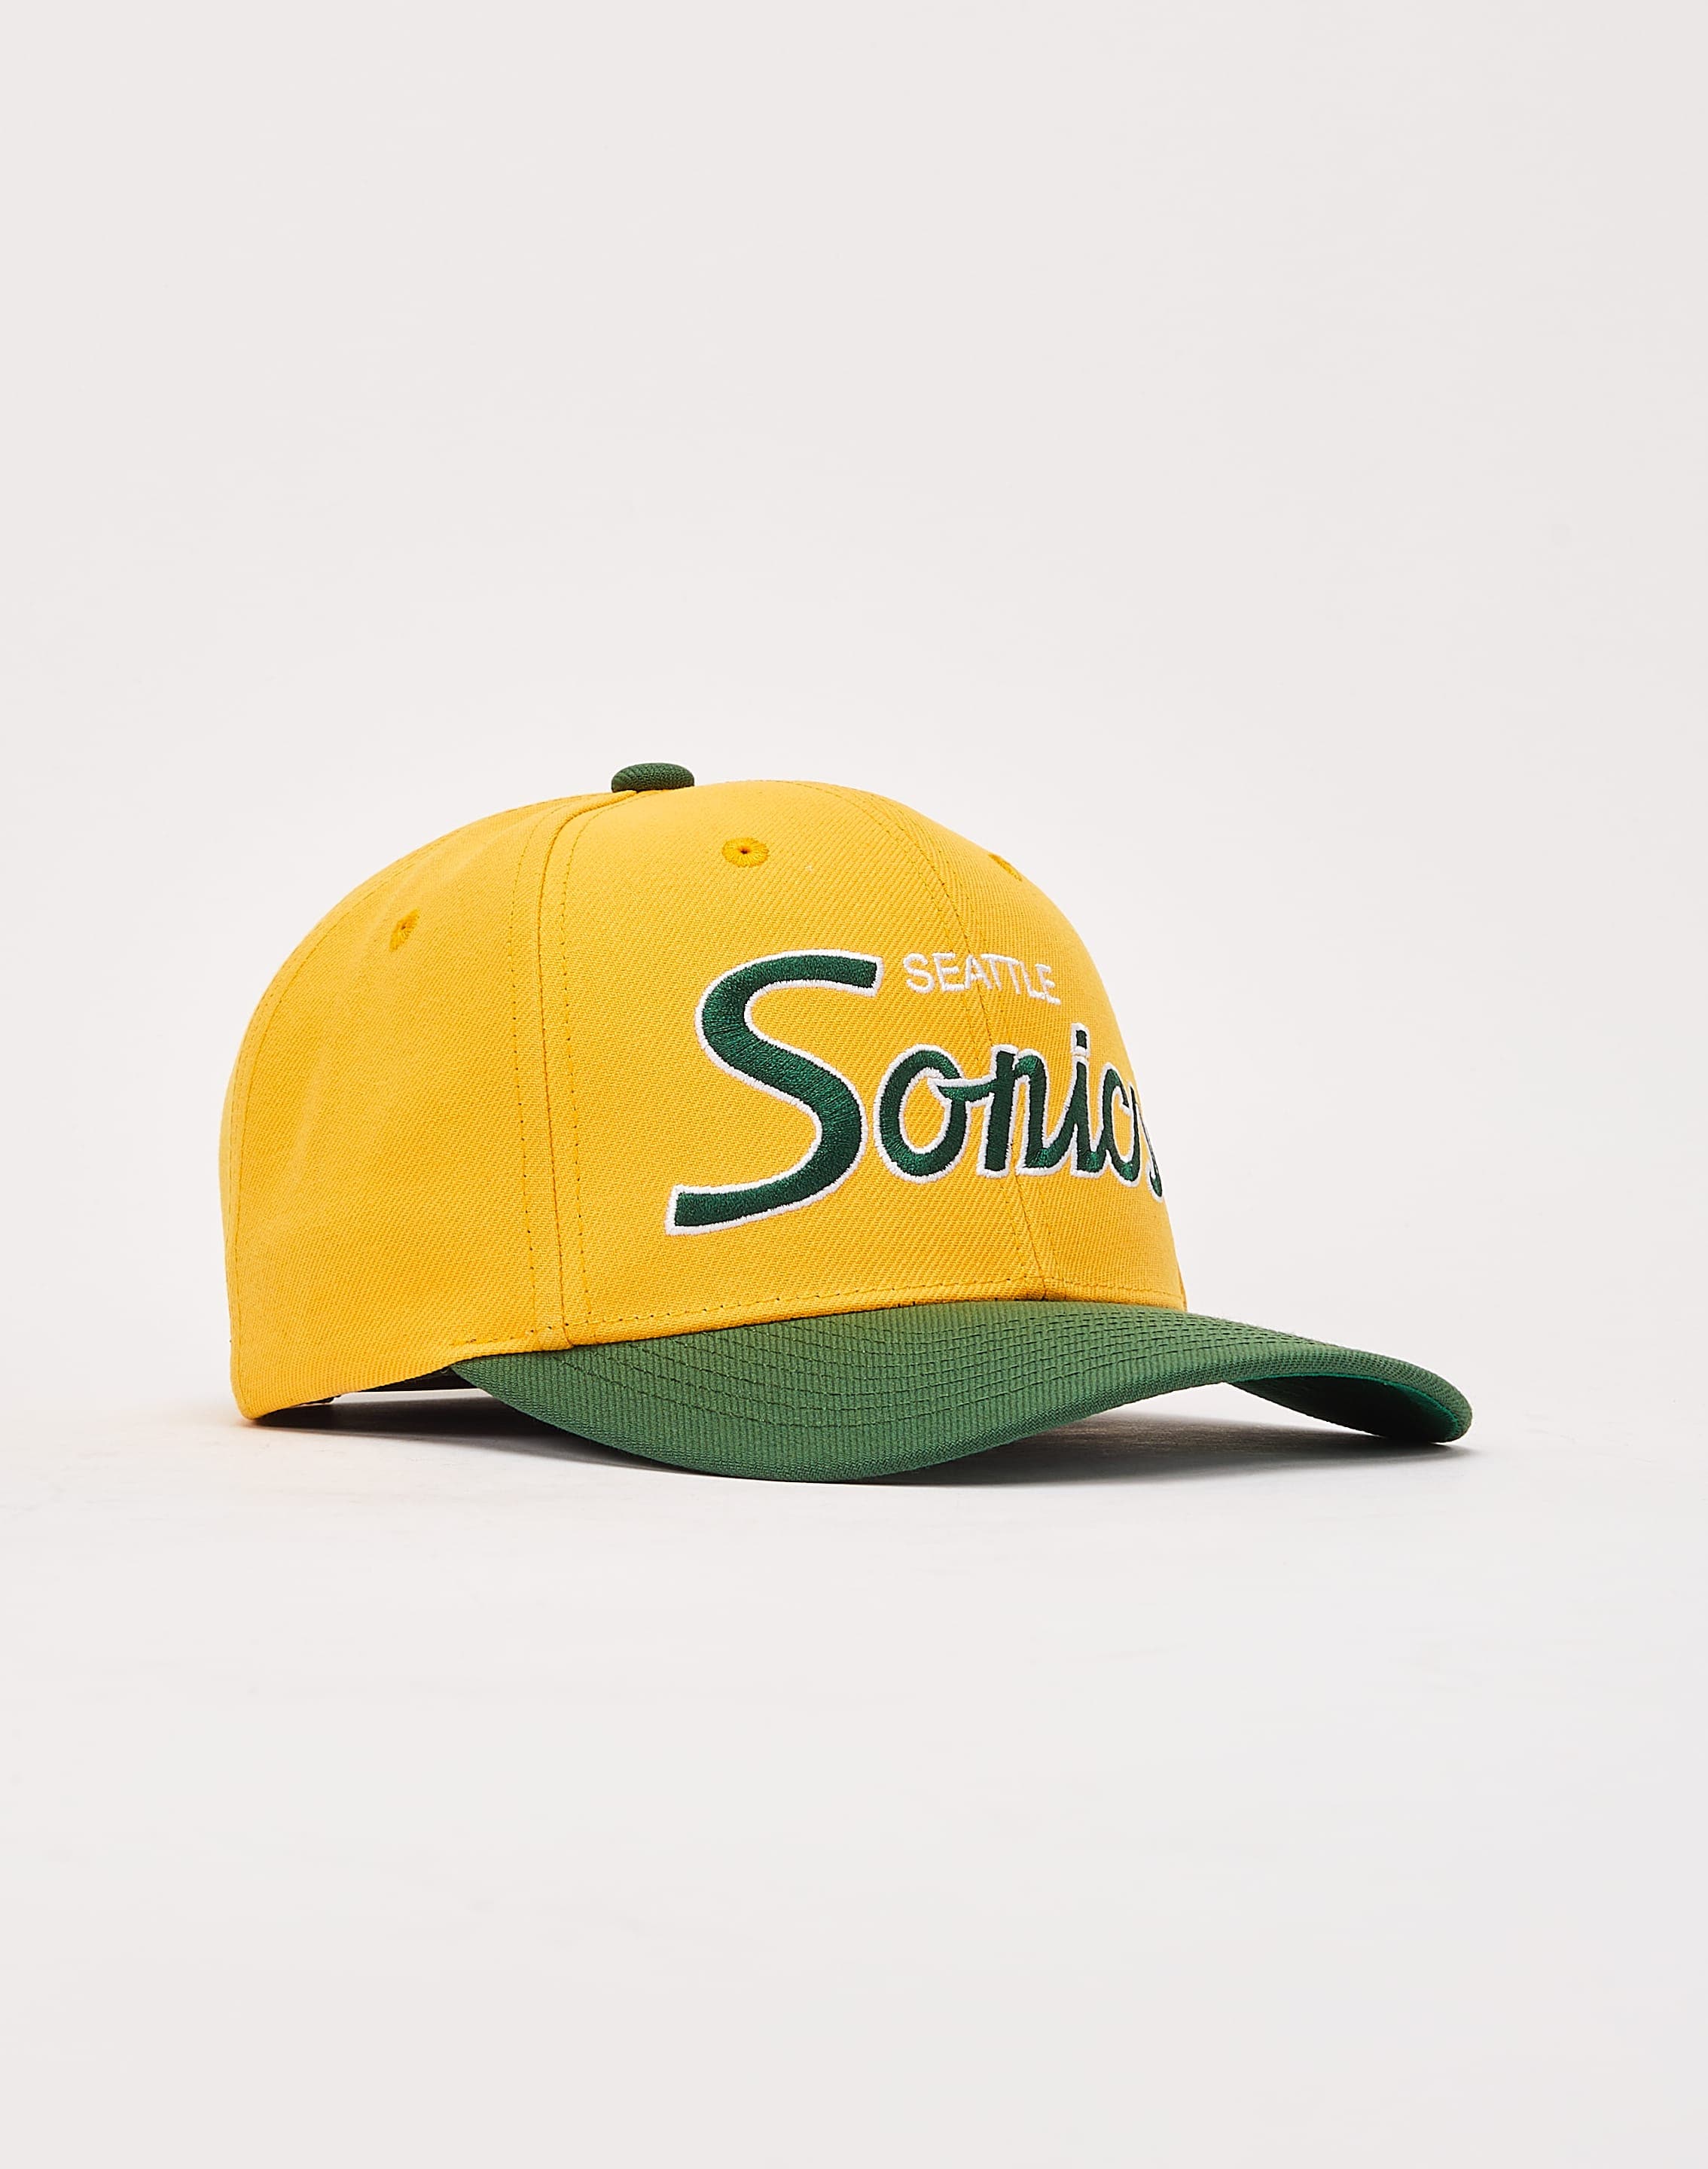 Seattle SuperSonics Hats, Sonics Caps, Beanie, Snapbacks